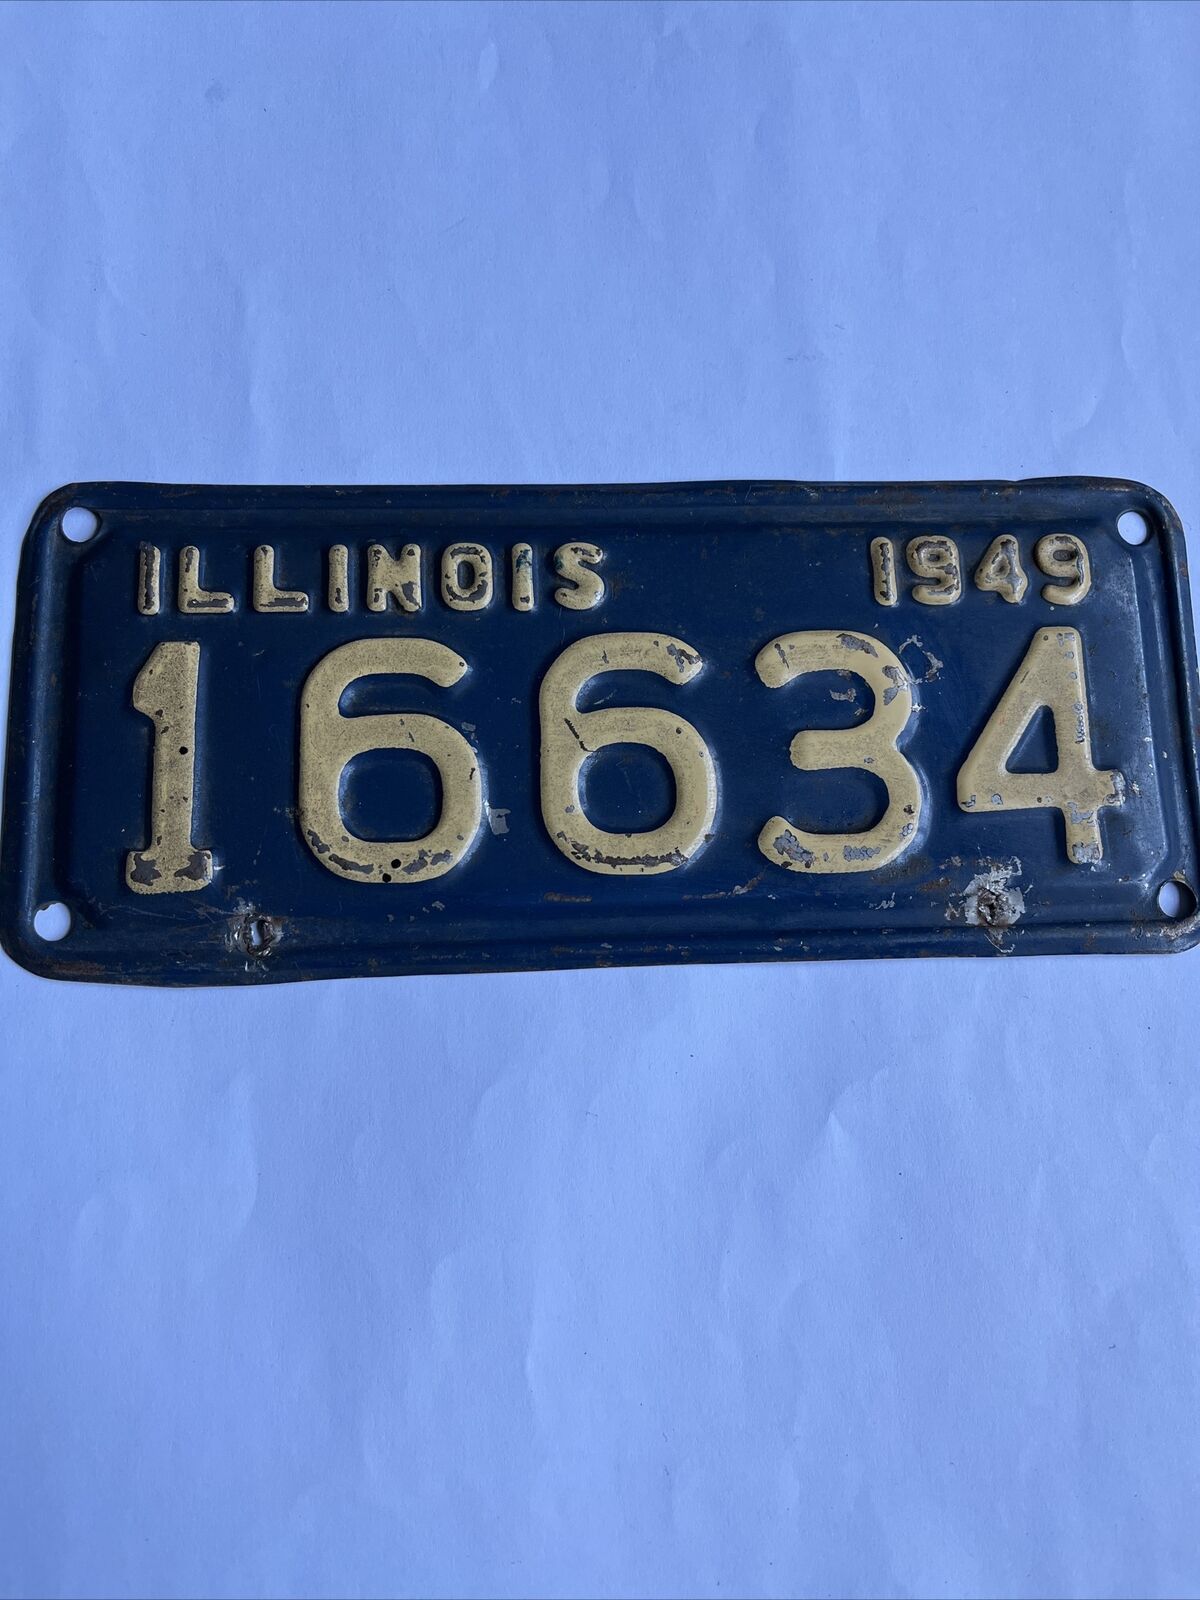 Vintage 1949 Illinois Motorcycle 🏍license plate Tag #16634. Antique 5 Digit